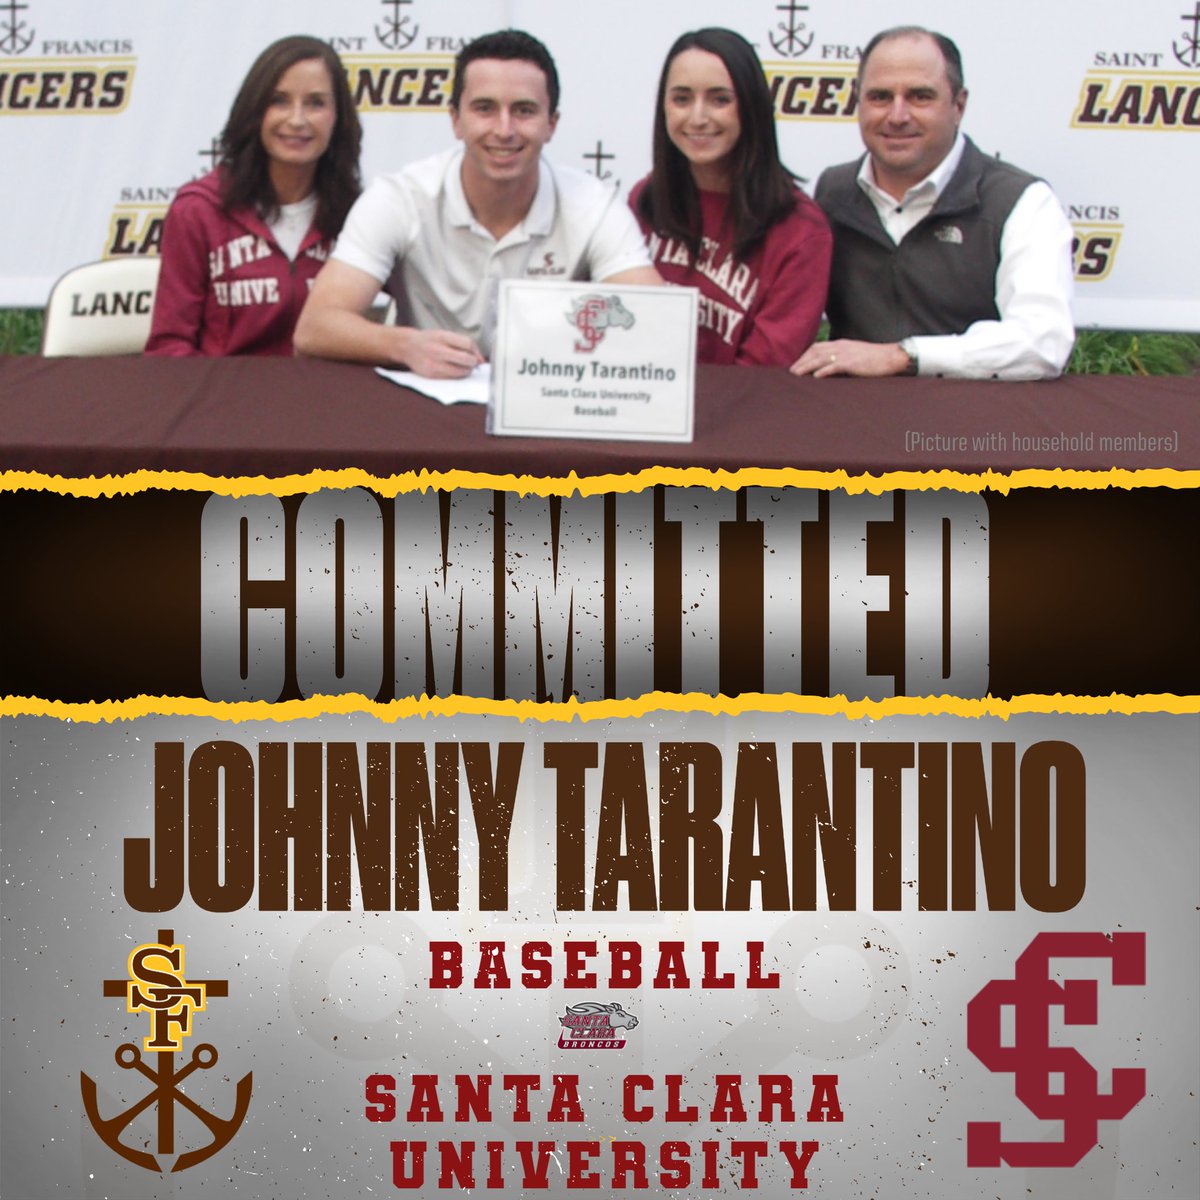 Congrats Johnny T!! @SCU_Baseball